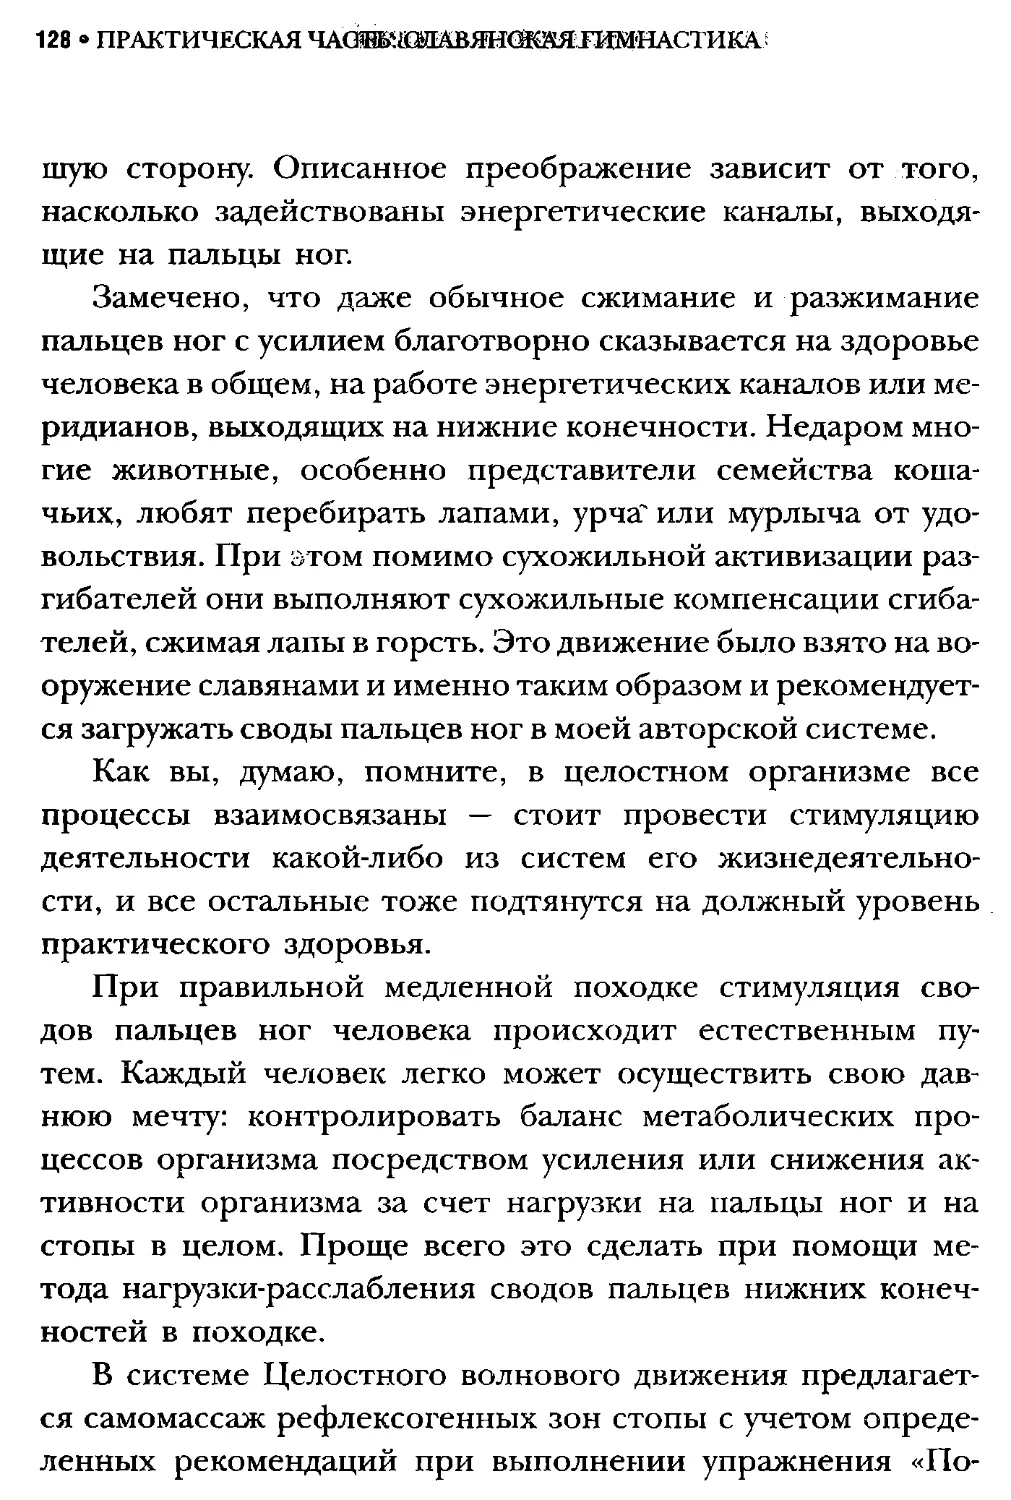 ﻿СлавянеТекст_page0064_1